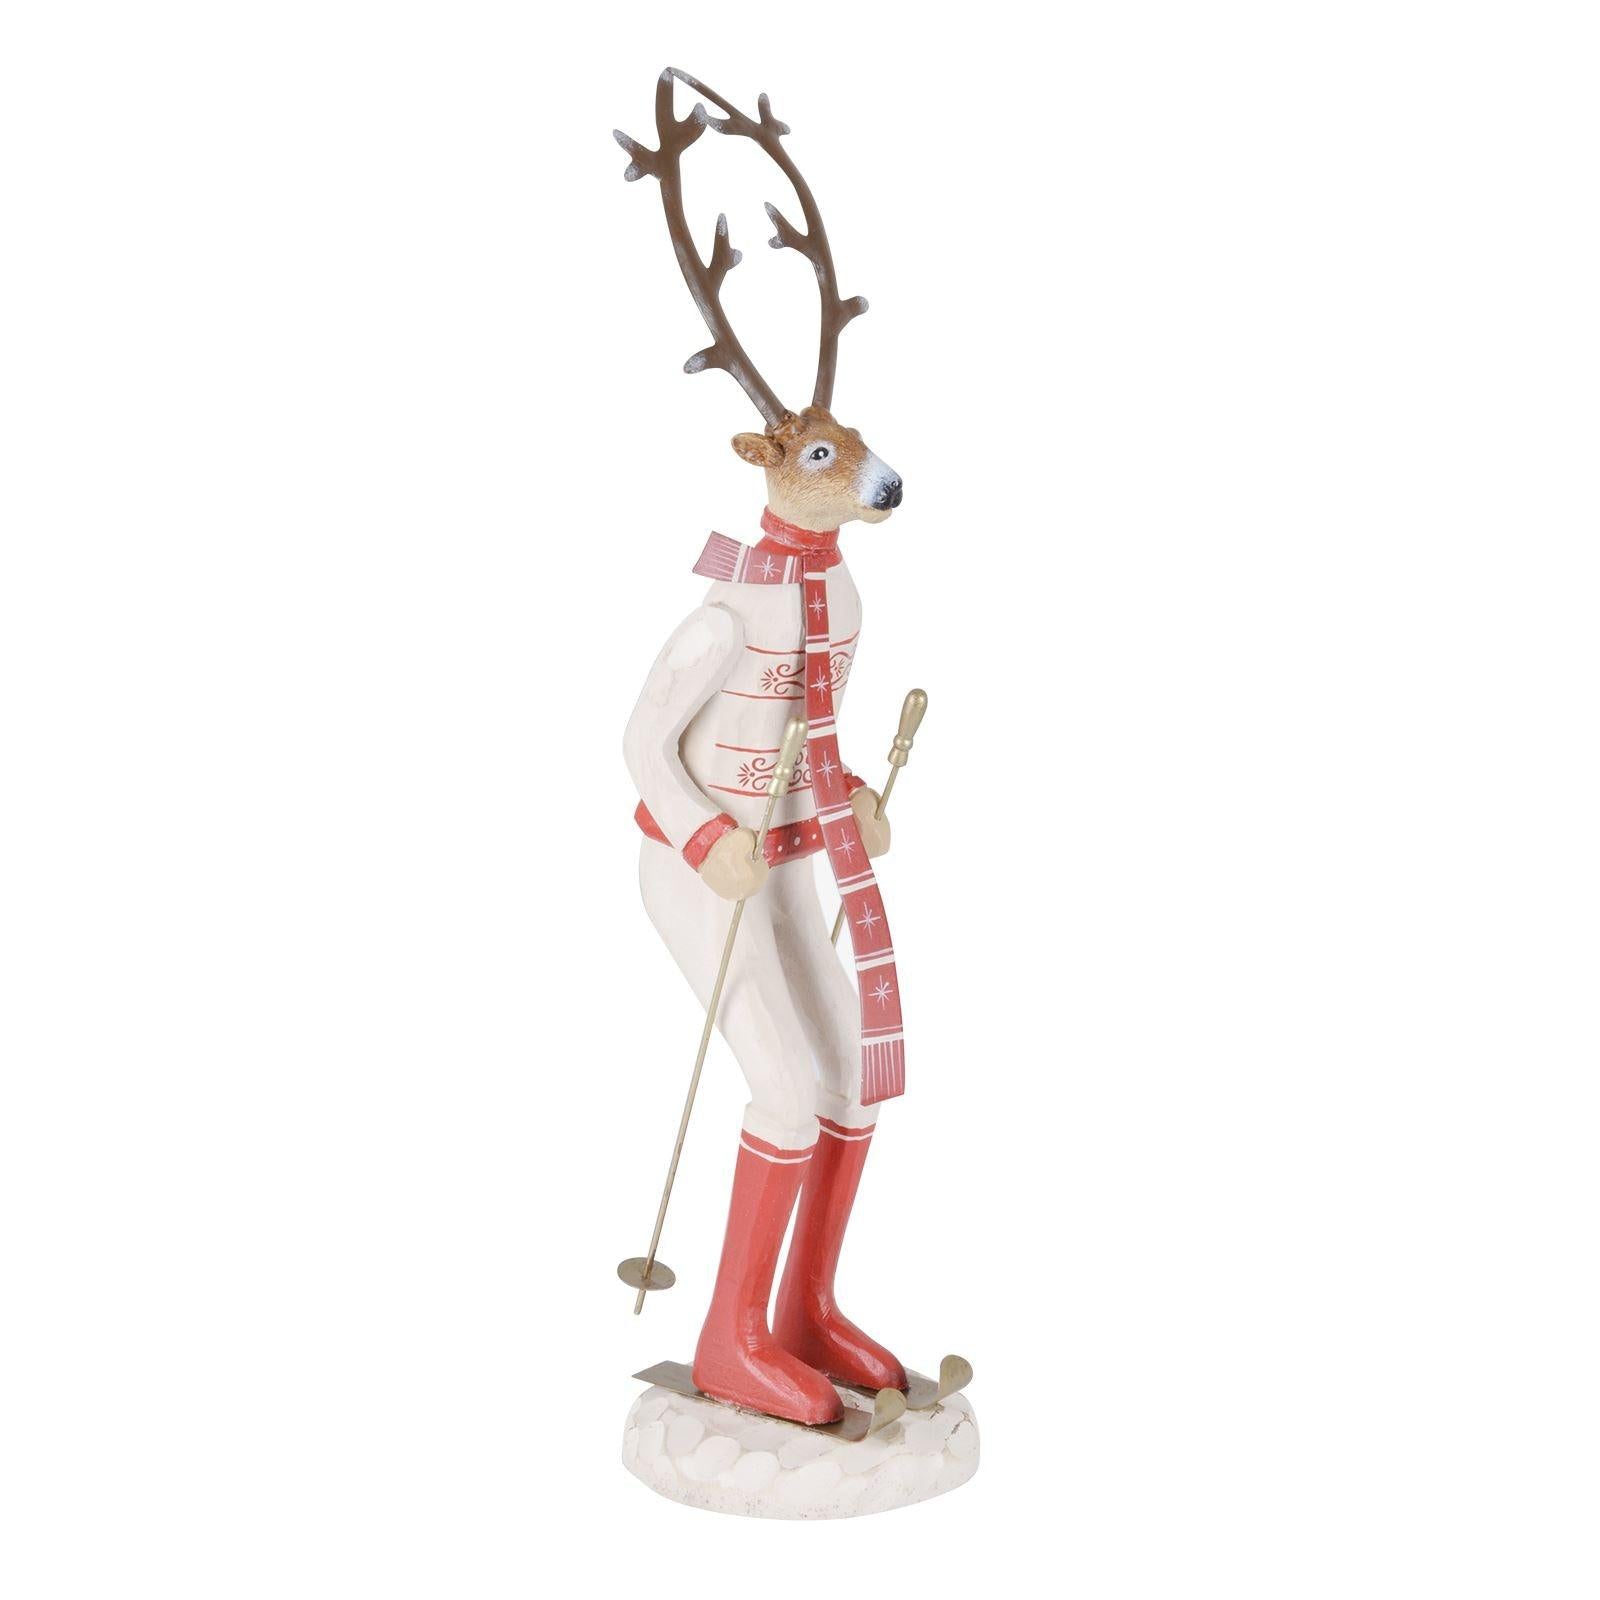 Mr Crimbo 17" Novelty Skiiing Reindeer Christmas Ornament - MrCrimbo.co.uk -XS4509 - White -christmas decorations